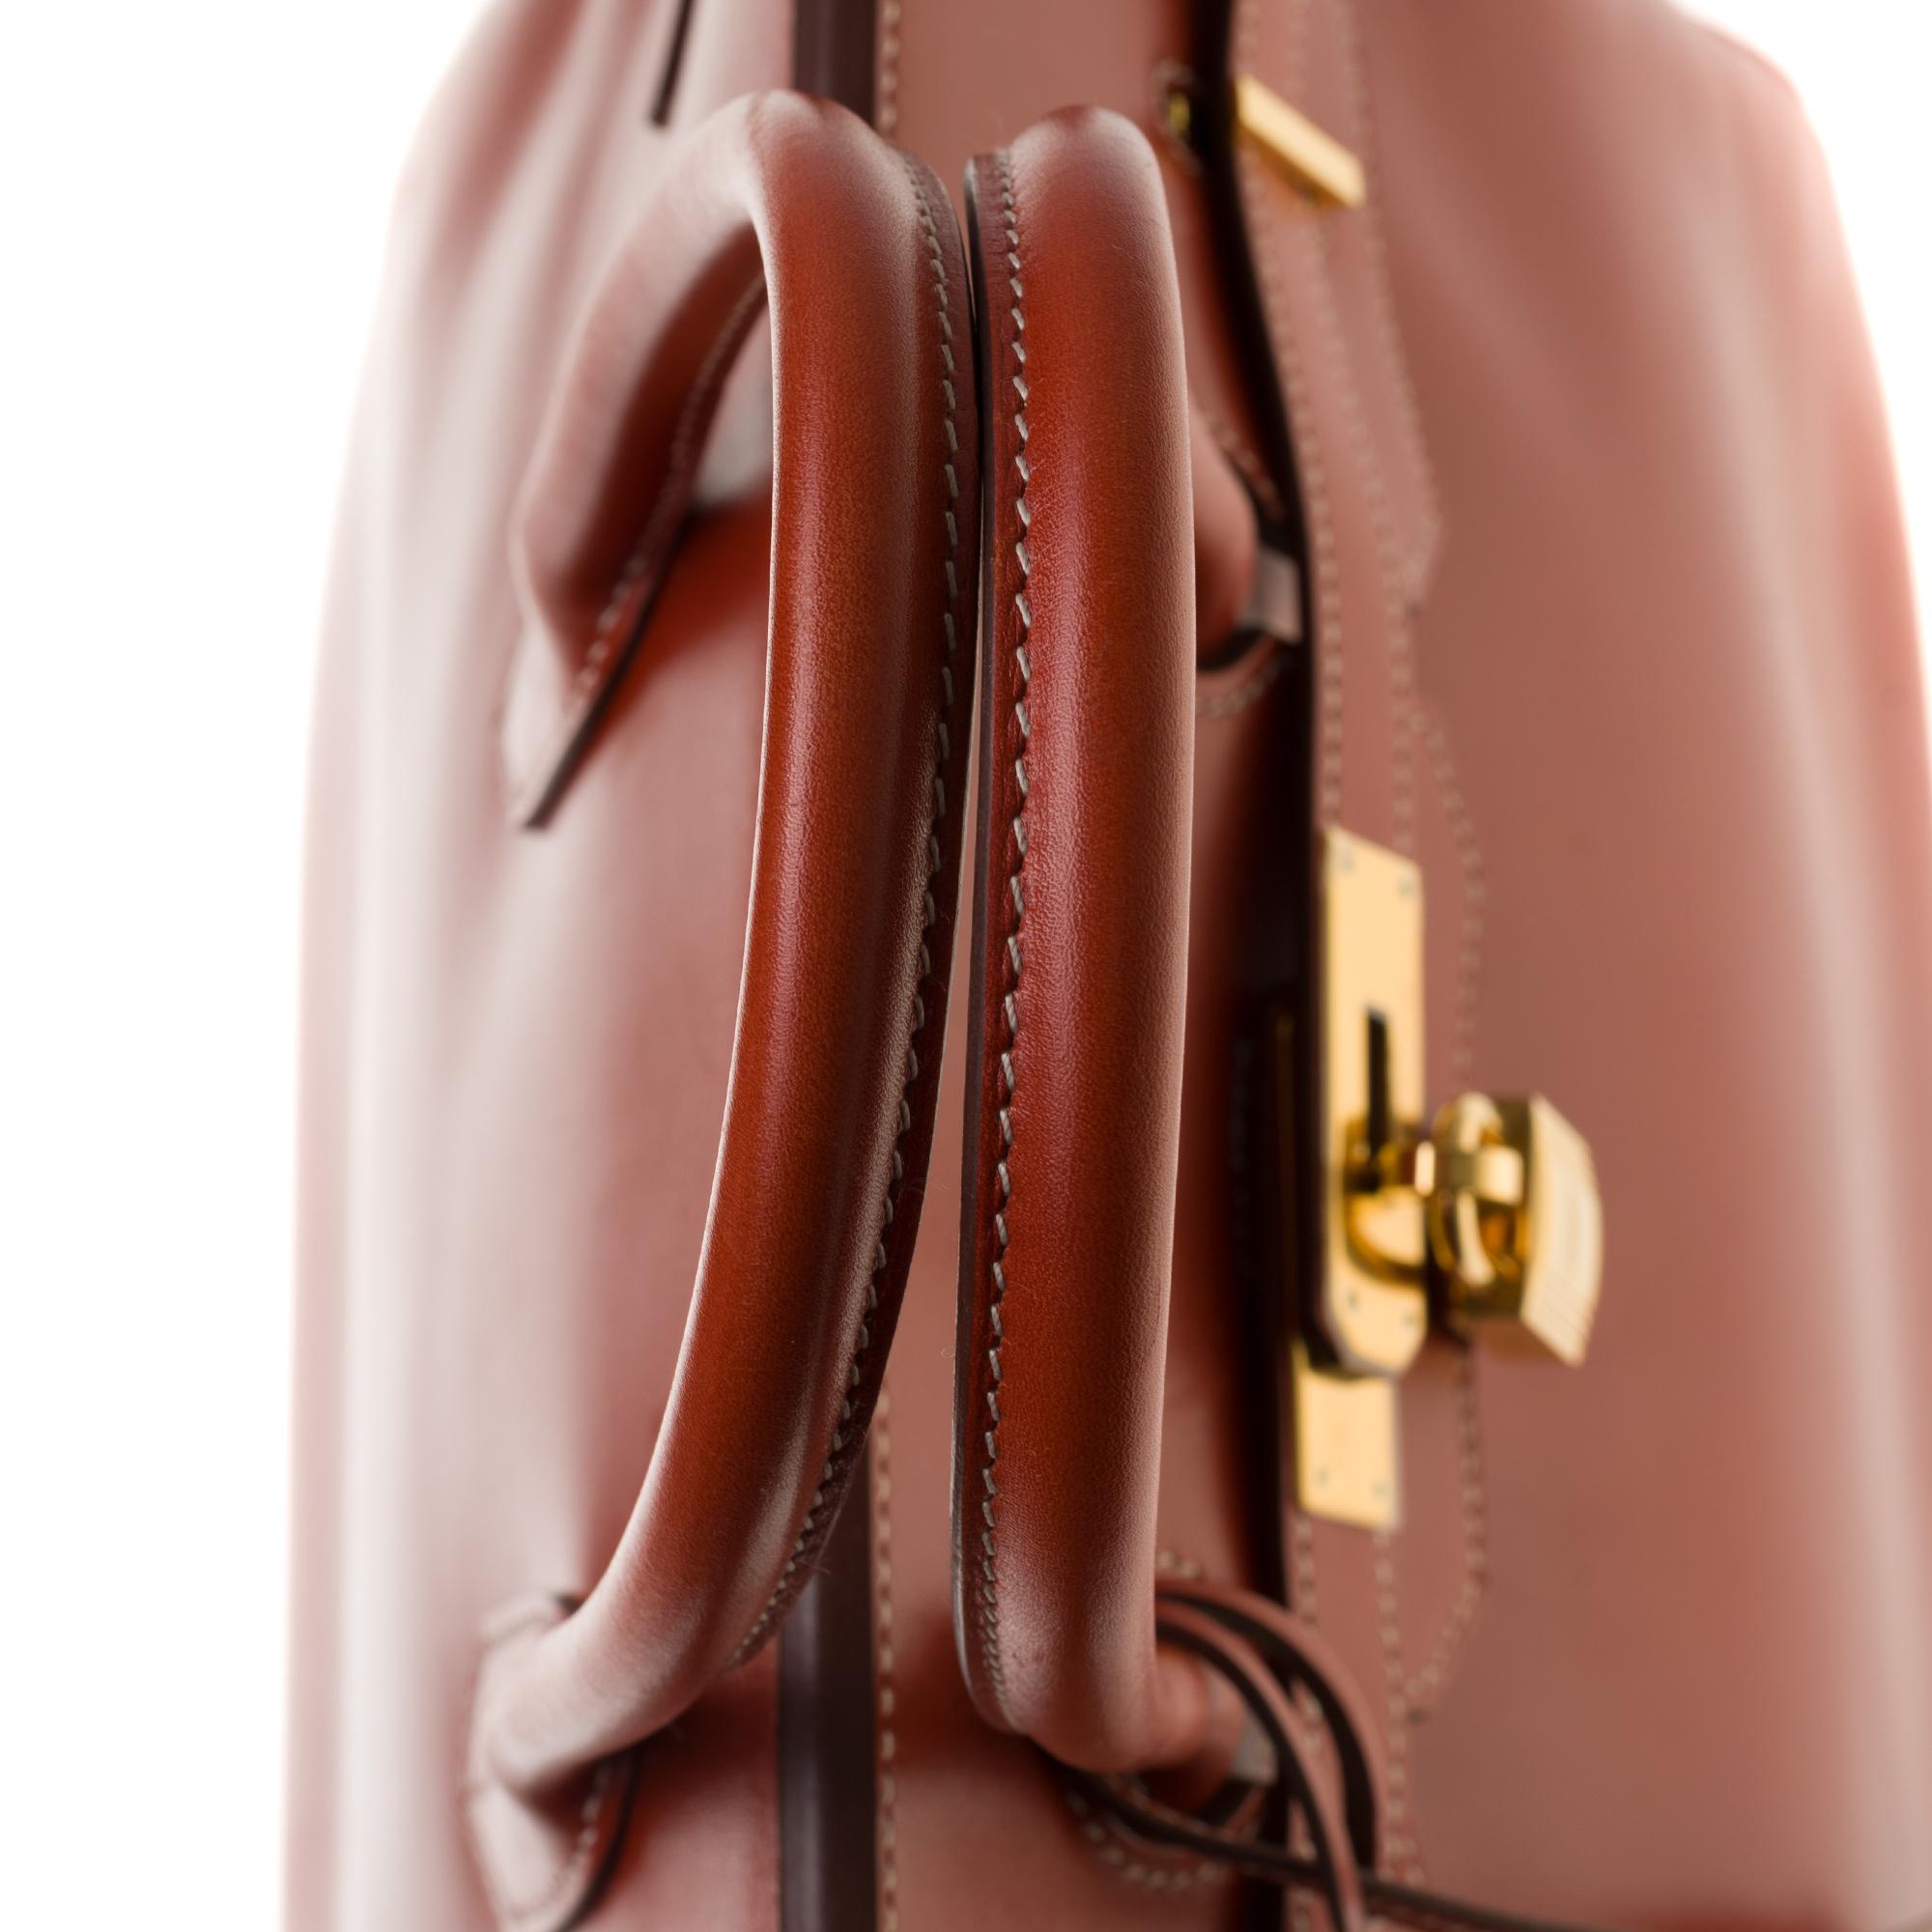 RARE Hermès Birkin 30 handbag in brick box calf leather and gold hardware 1